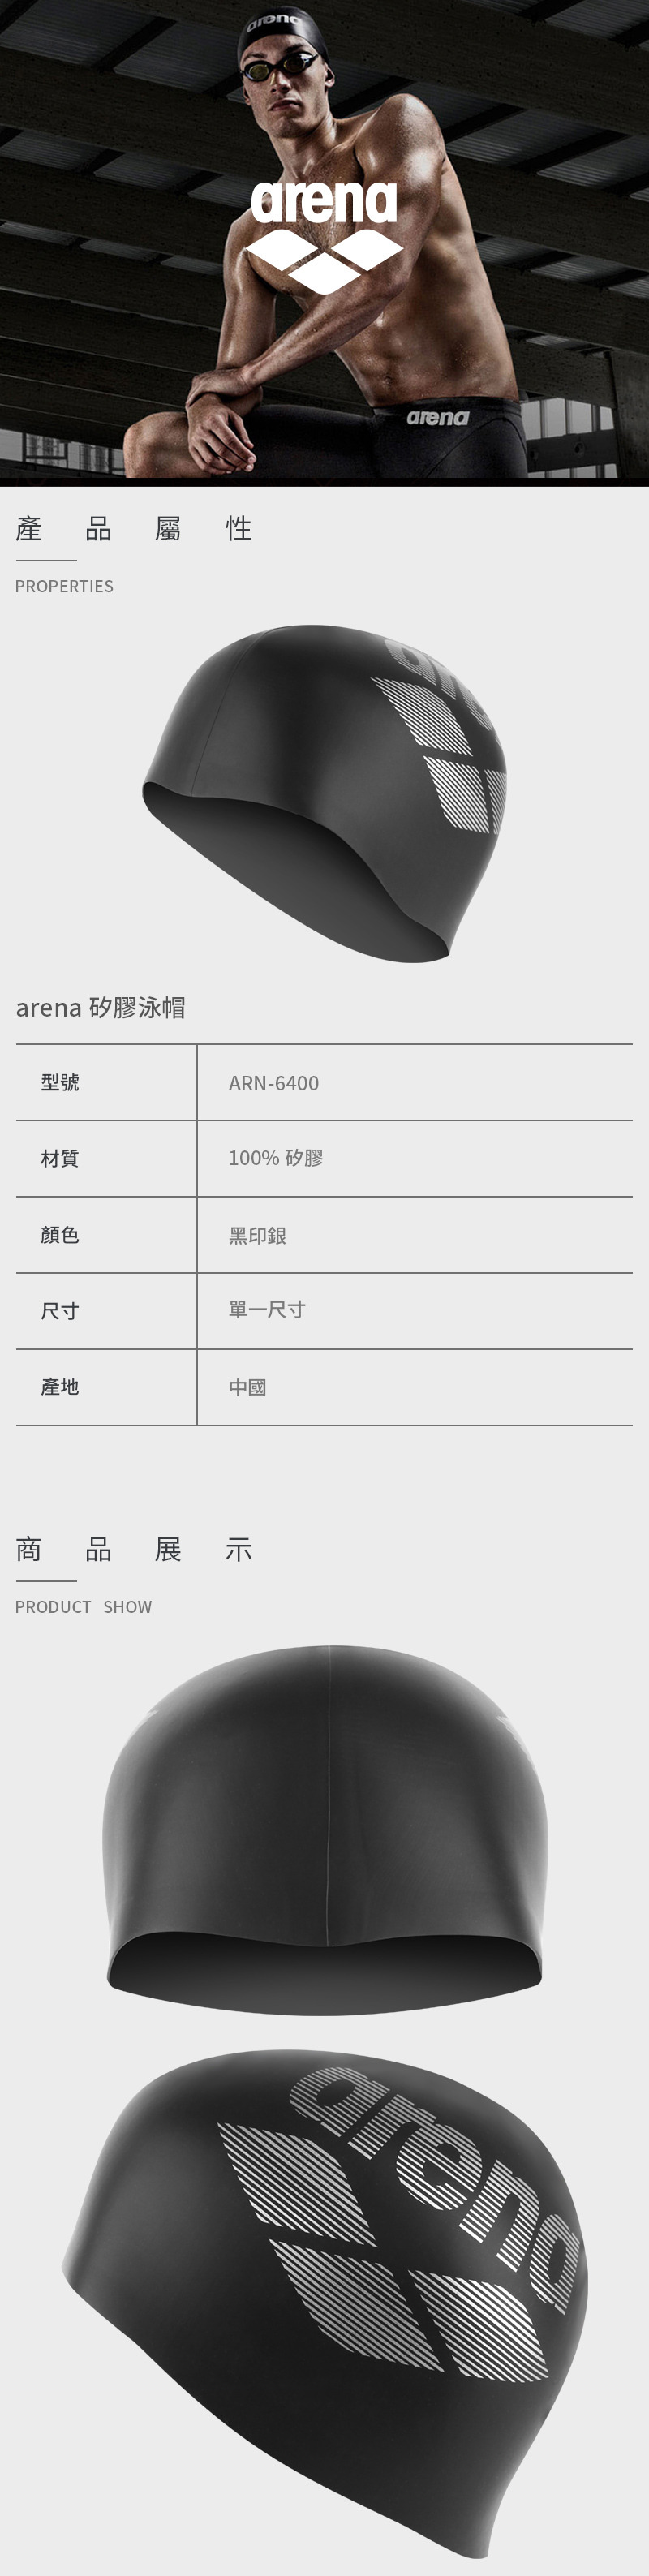 【arena】矽膠泳帽 ARN-6400